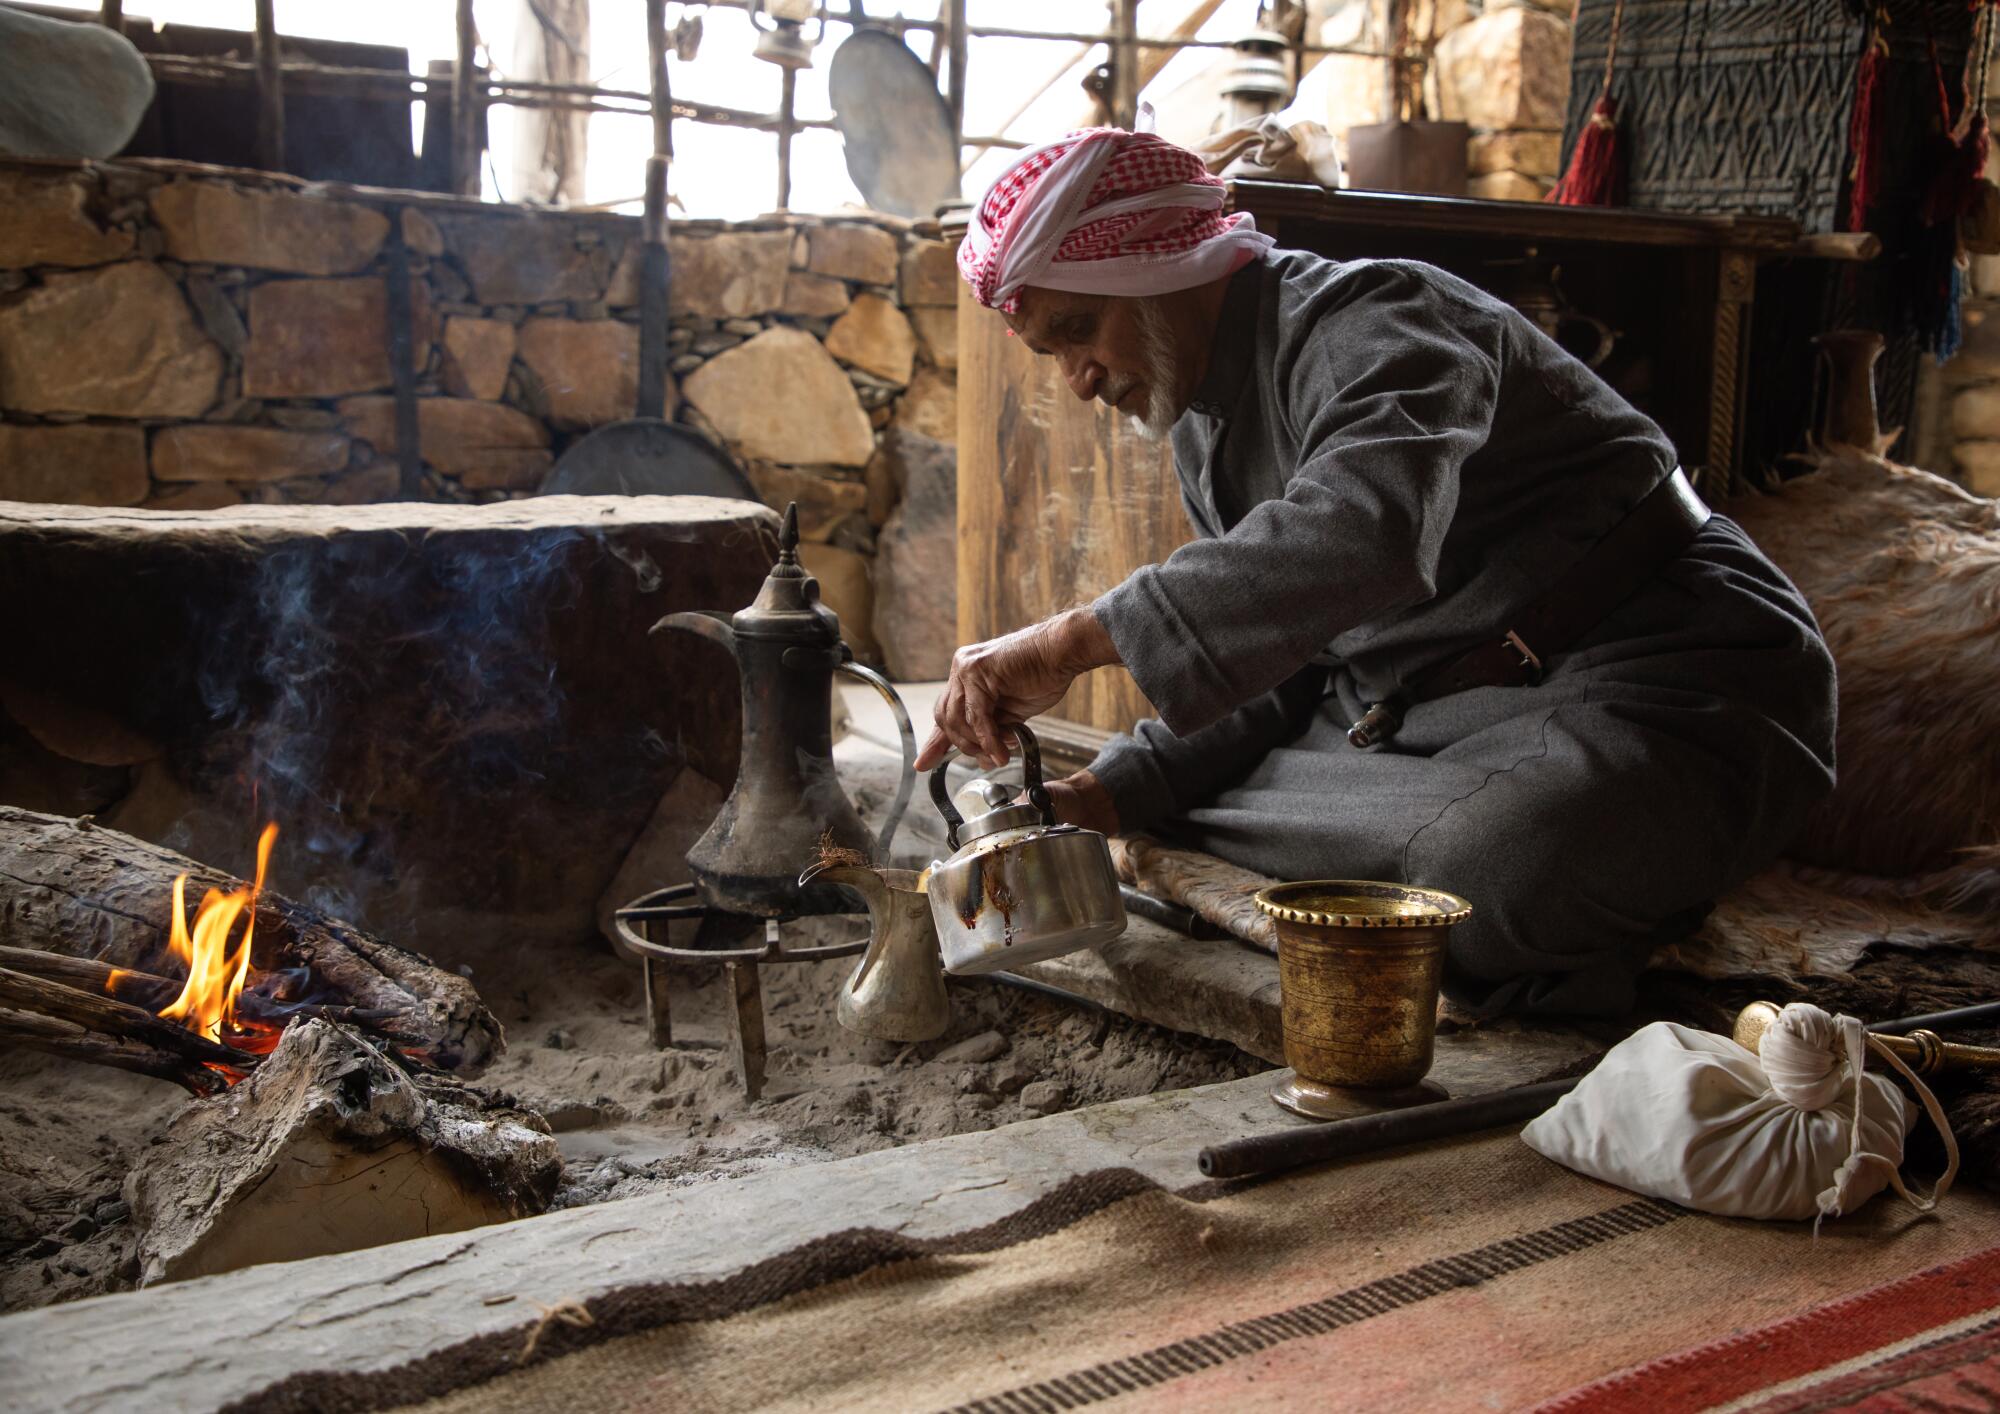  A Saudi man prepares coffee next to an open fire.